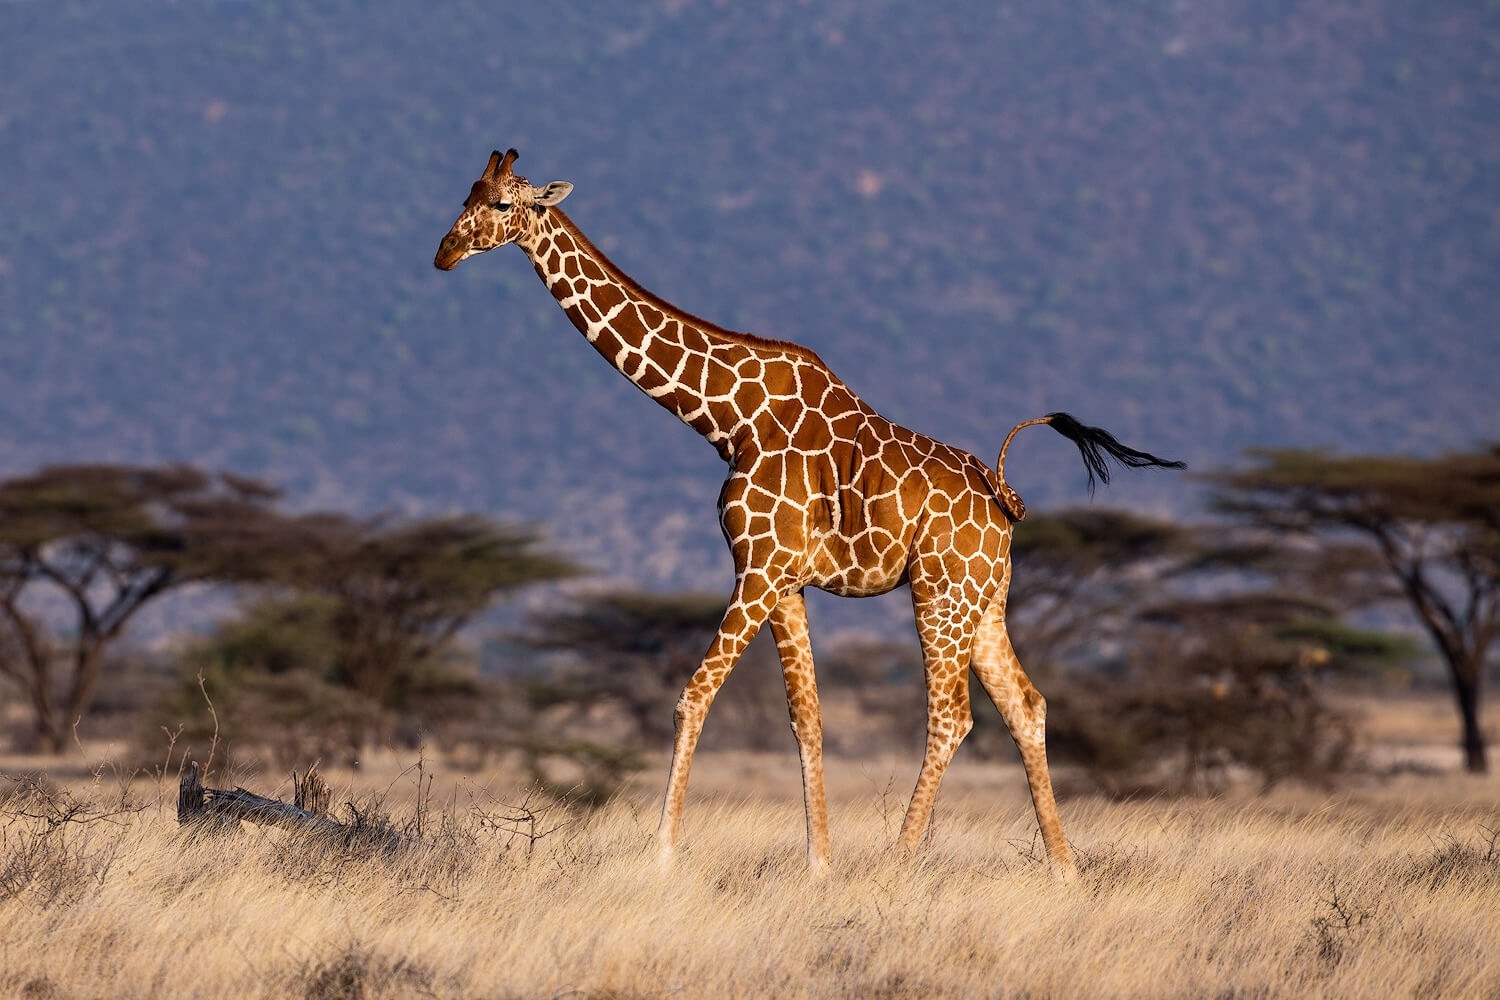 Widespread Gene Flow Marks Unique Evolutionary History in Giraffes